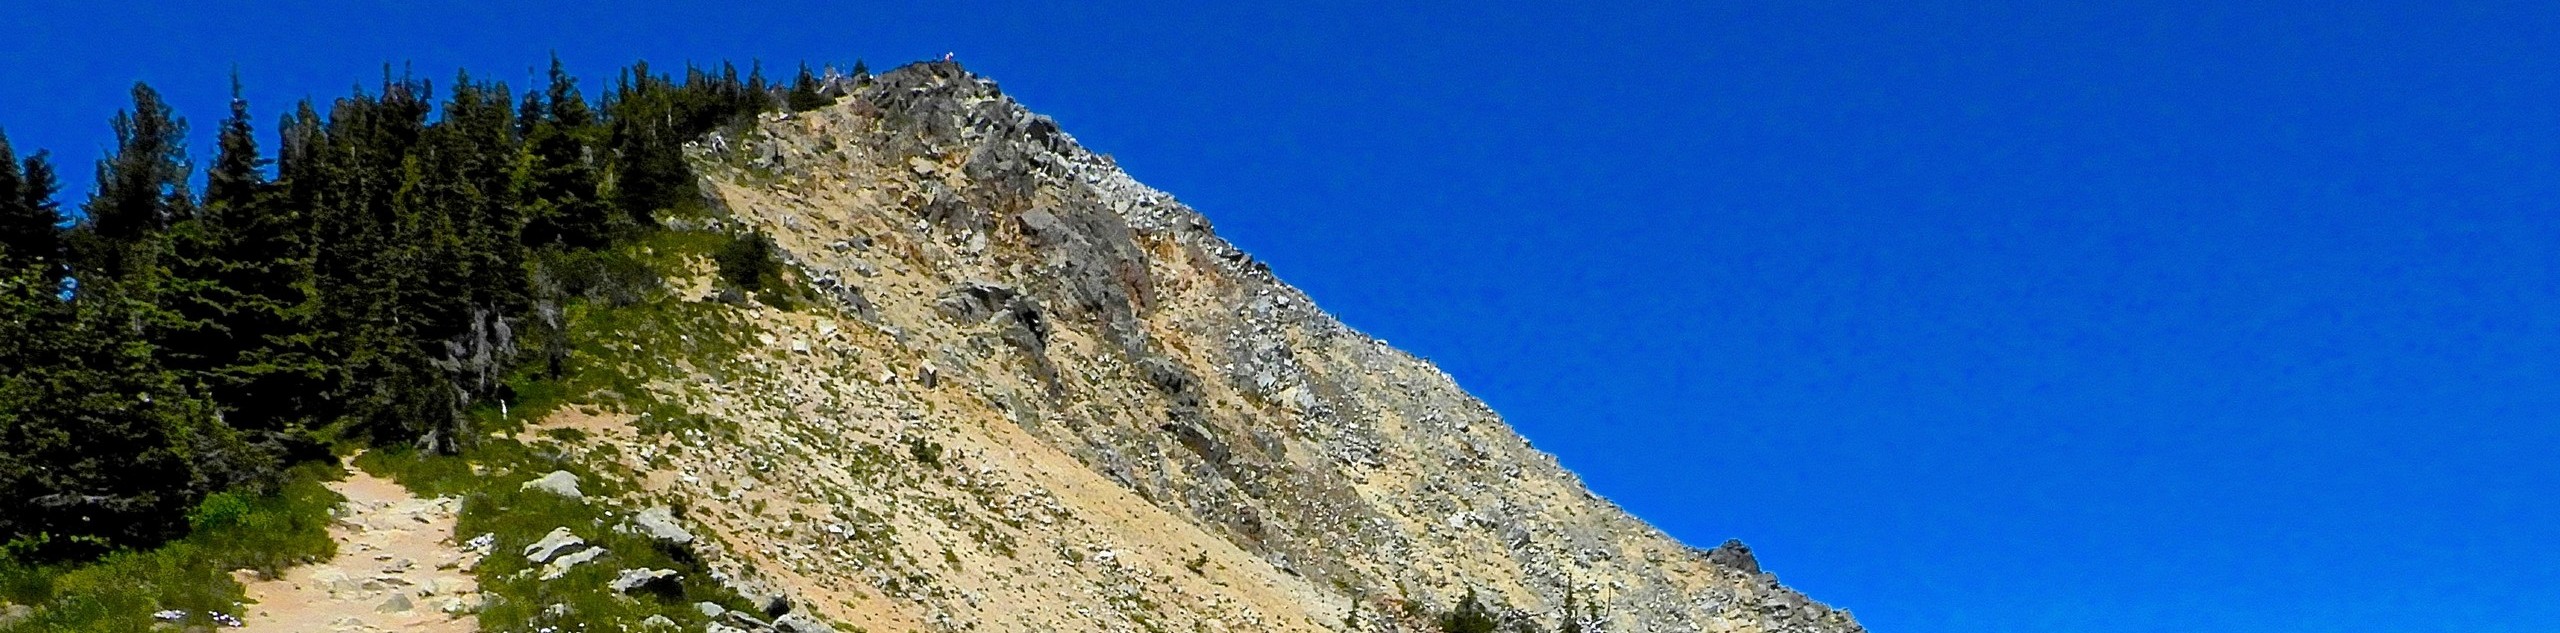 Dege Peak Trail